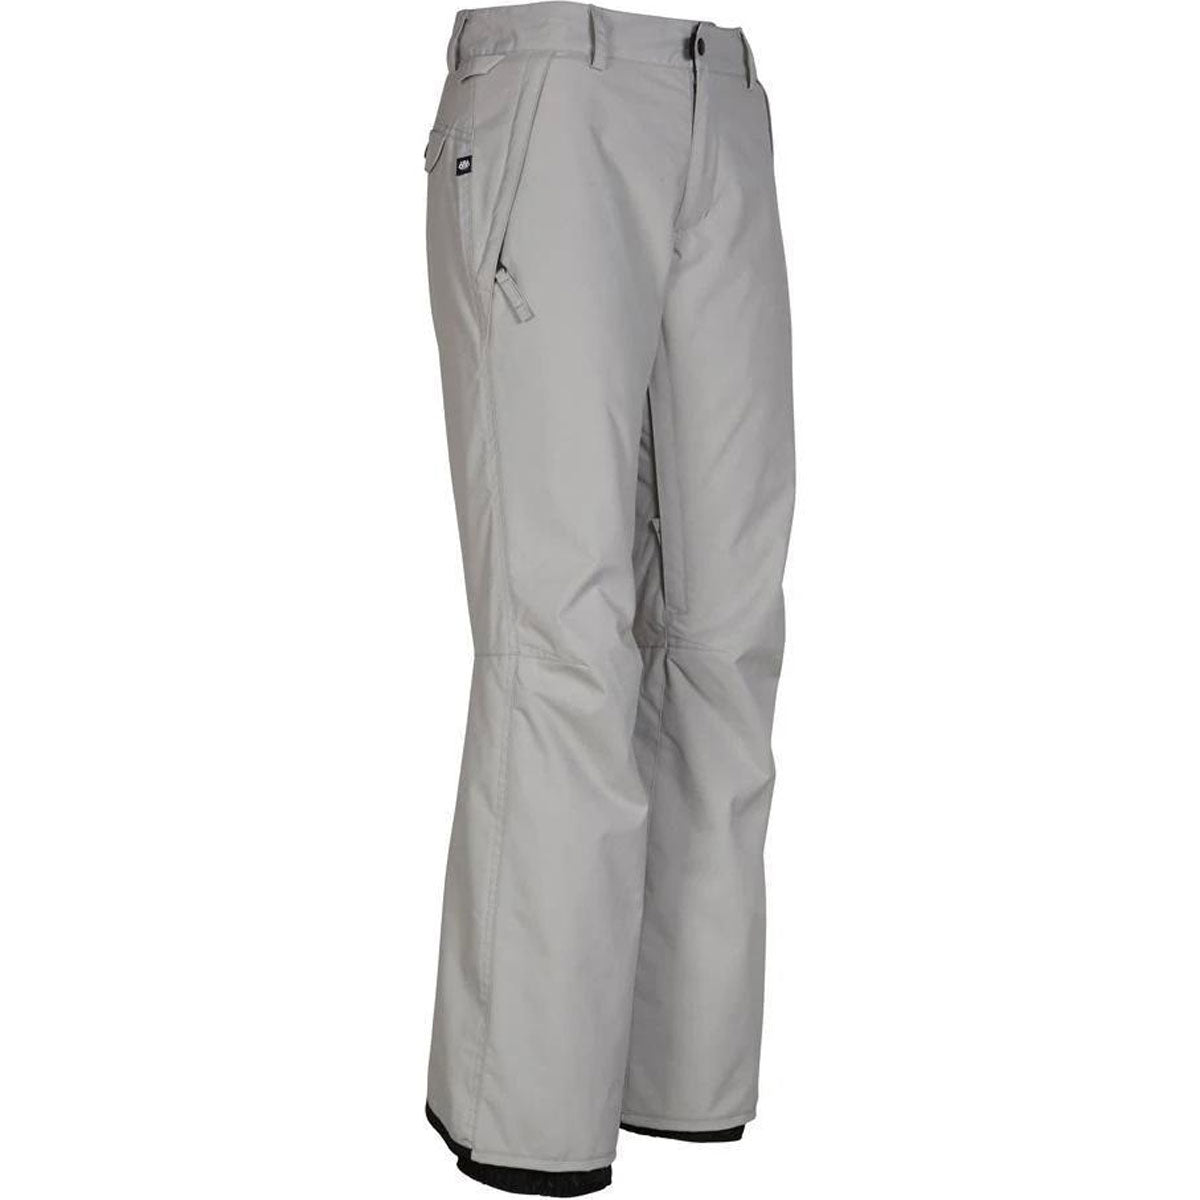 686 Womens Standard Shell Snowboard Pants - Light Grey image 3